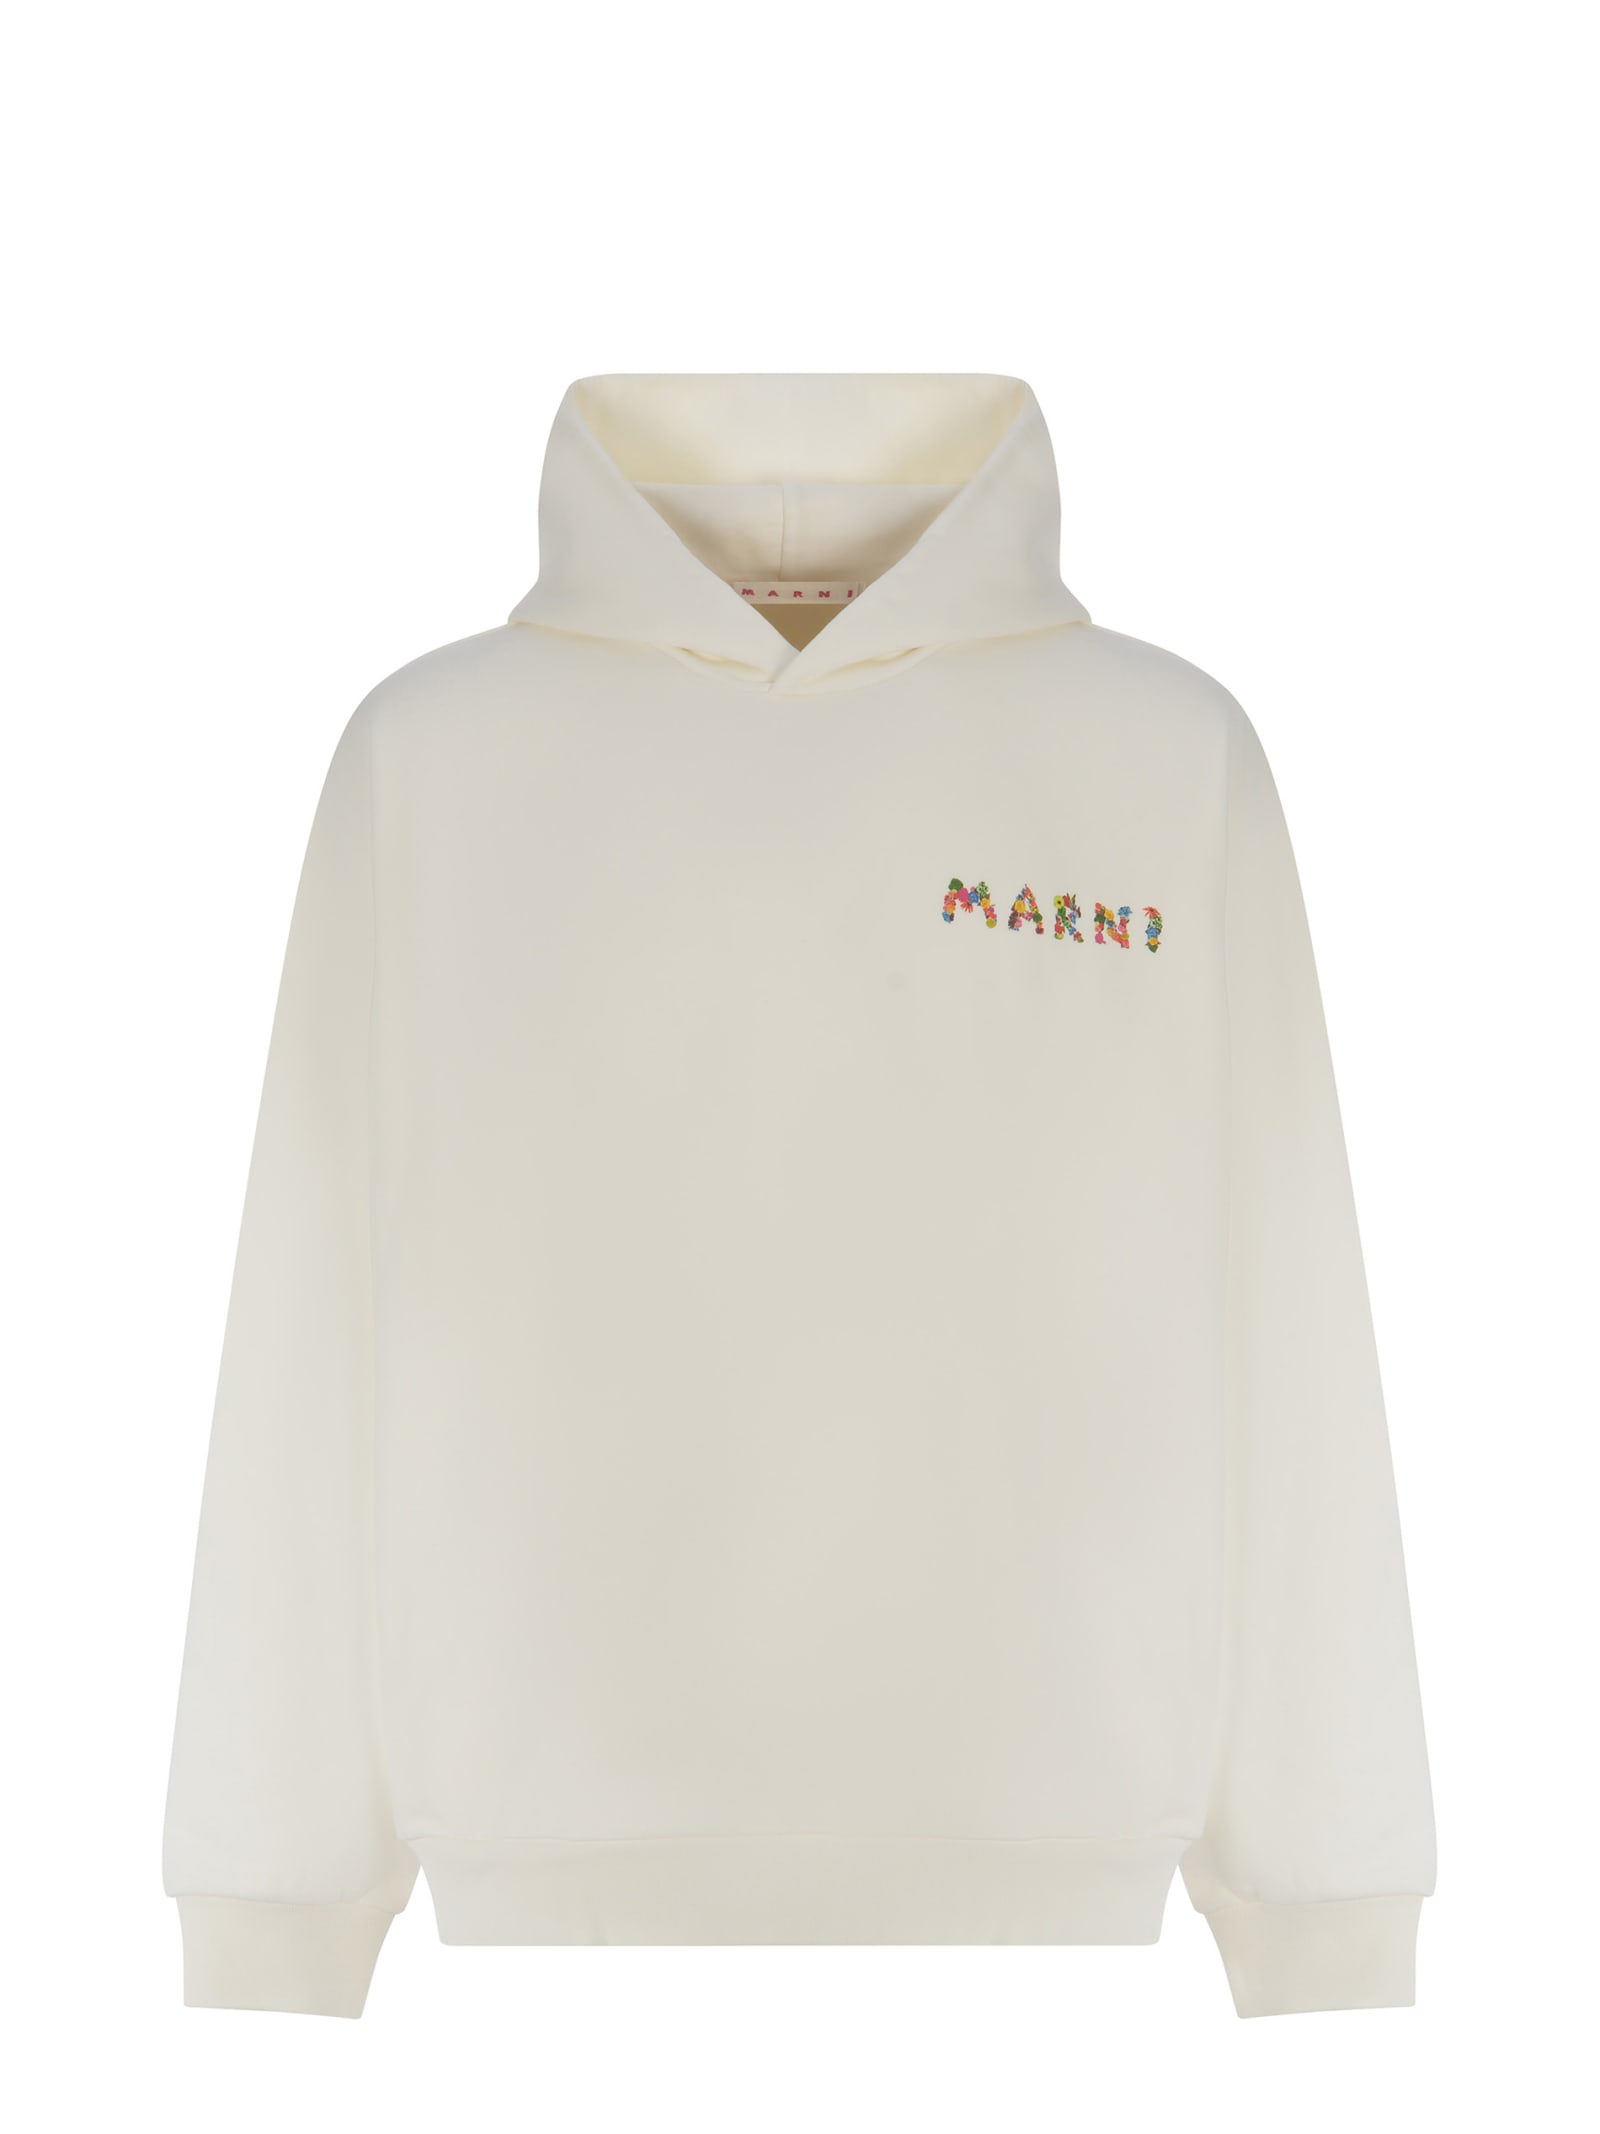 Shop Marni Hooded Sweatshirt  Made Of Cotton In Beige